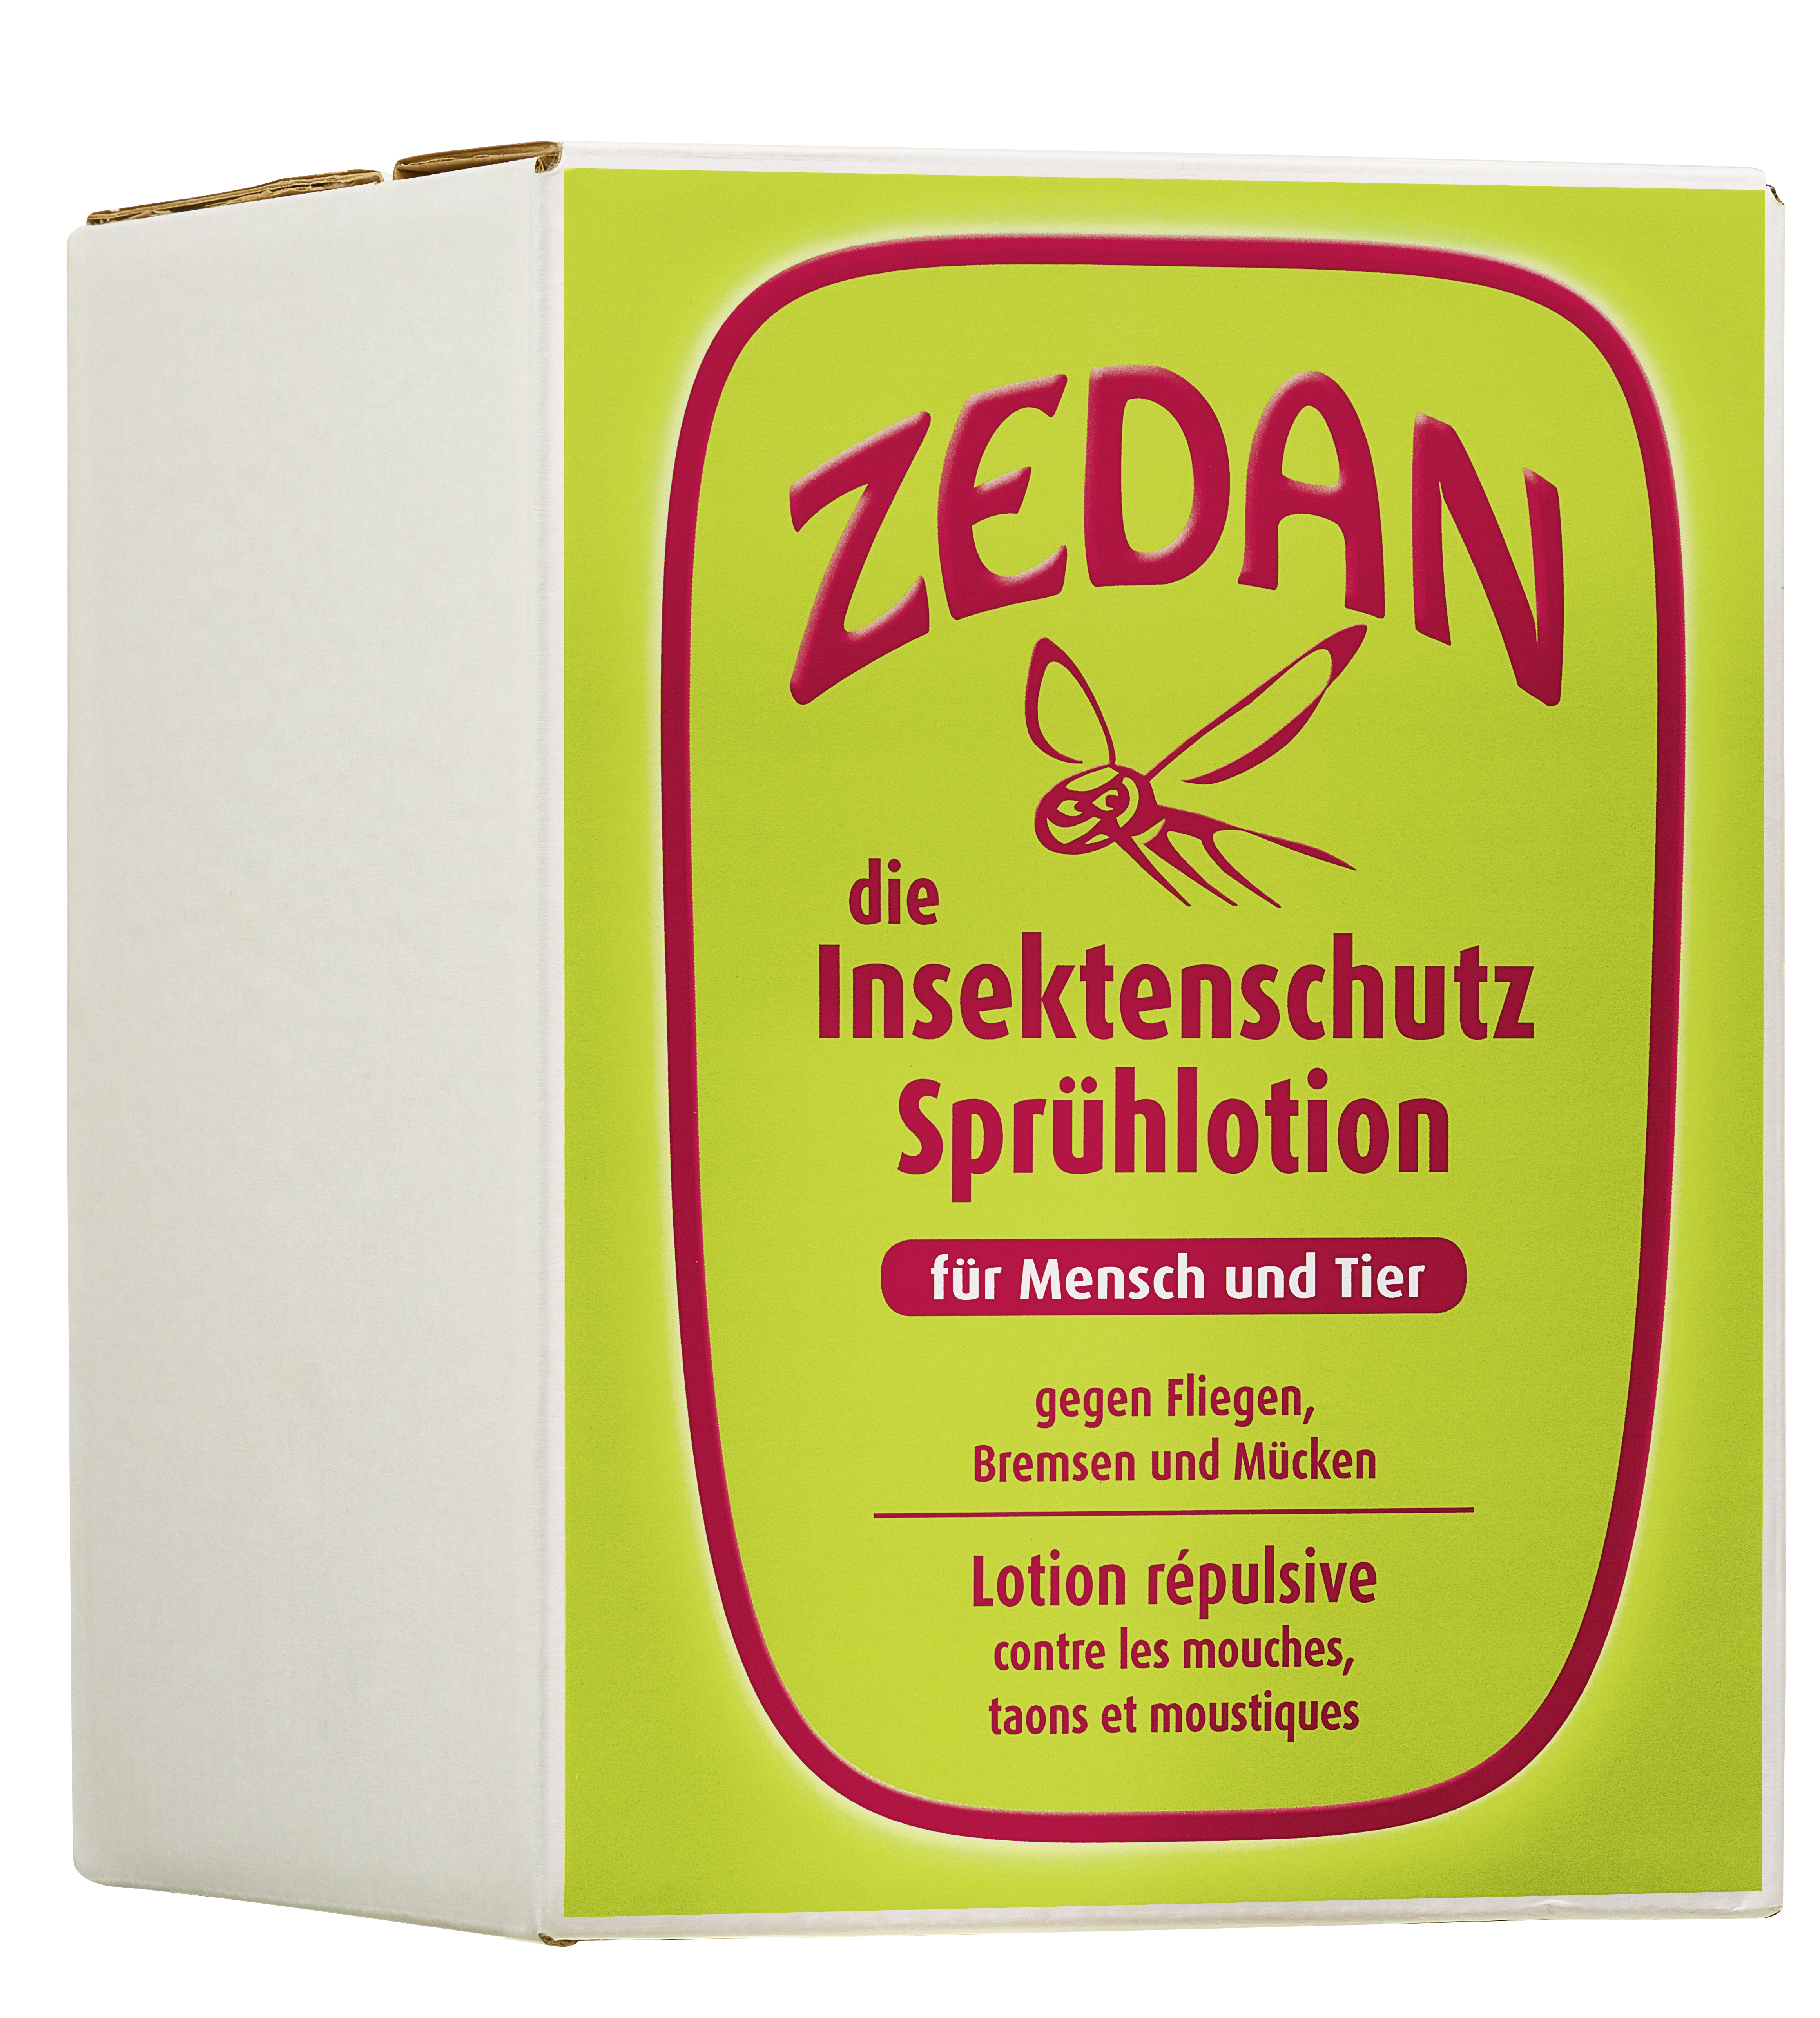 Zedan SP Insekten-schutz 5000ml Bag-in-Box